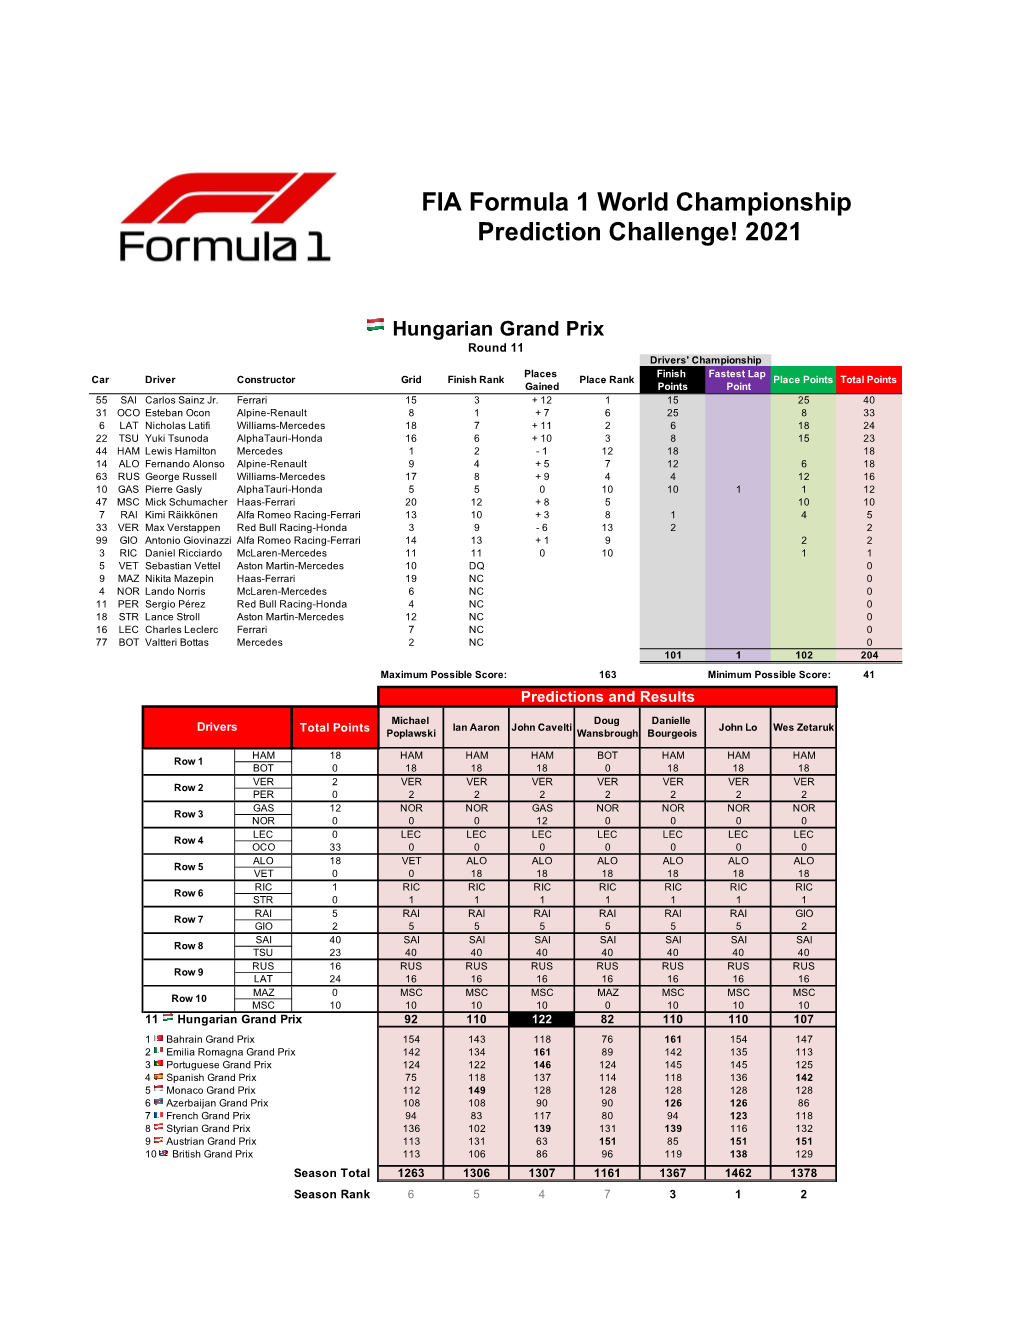 FIA Formula 1 World Championship Prediction Challenge! 2021